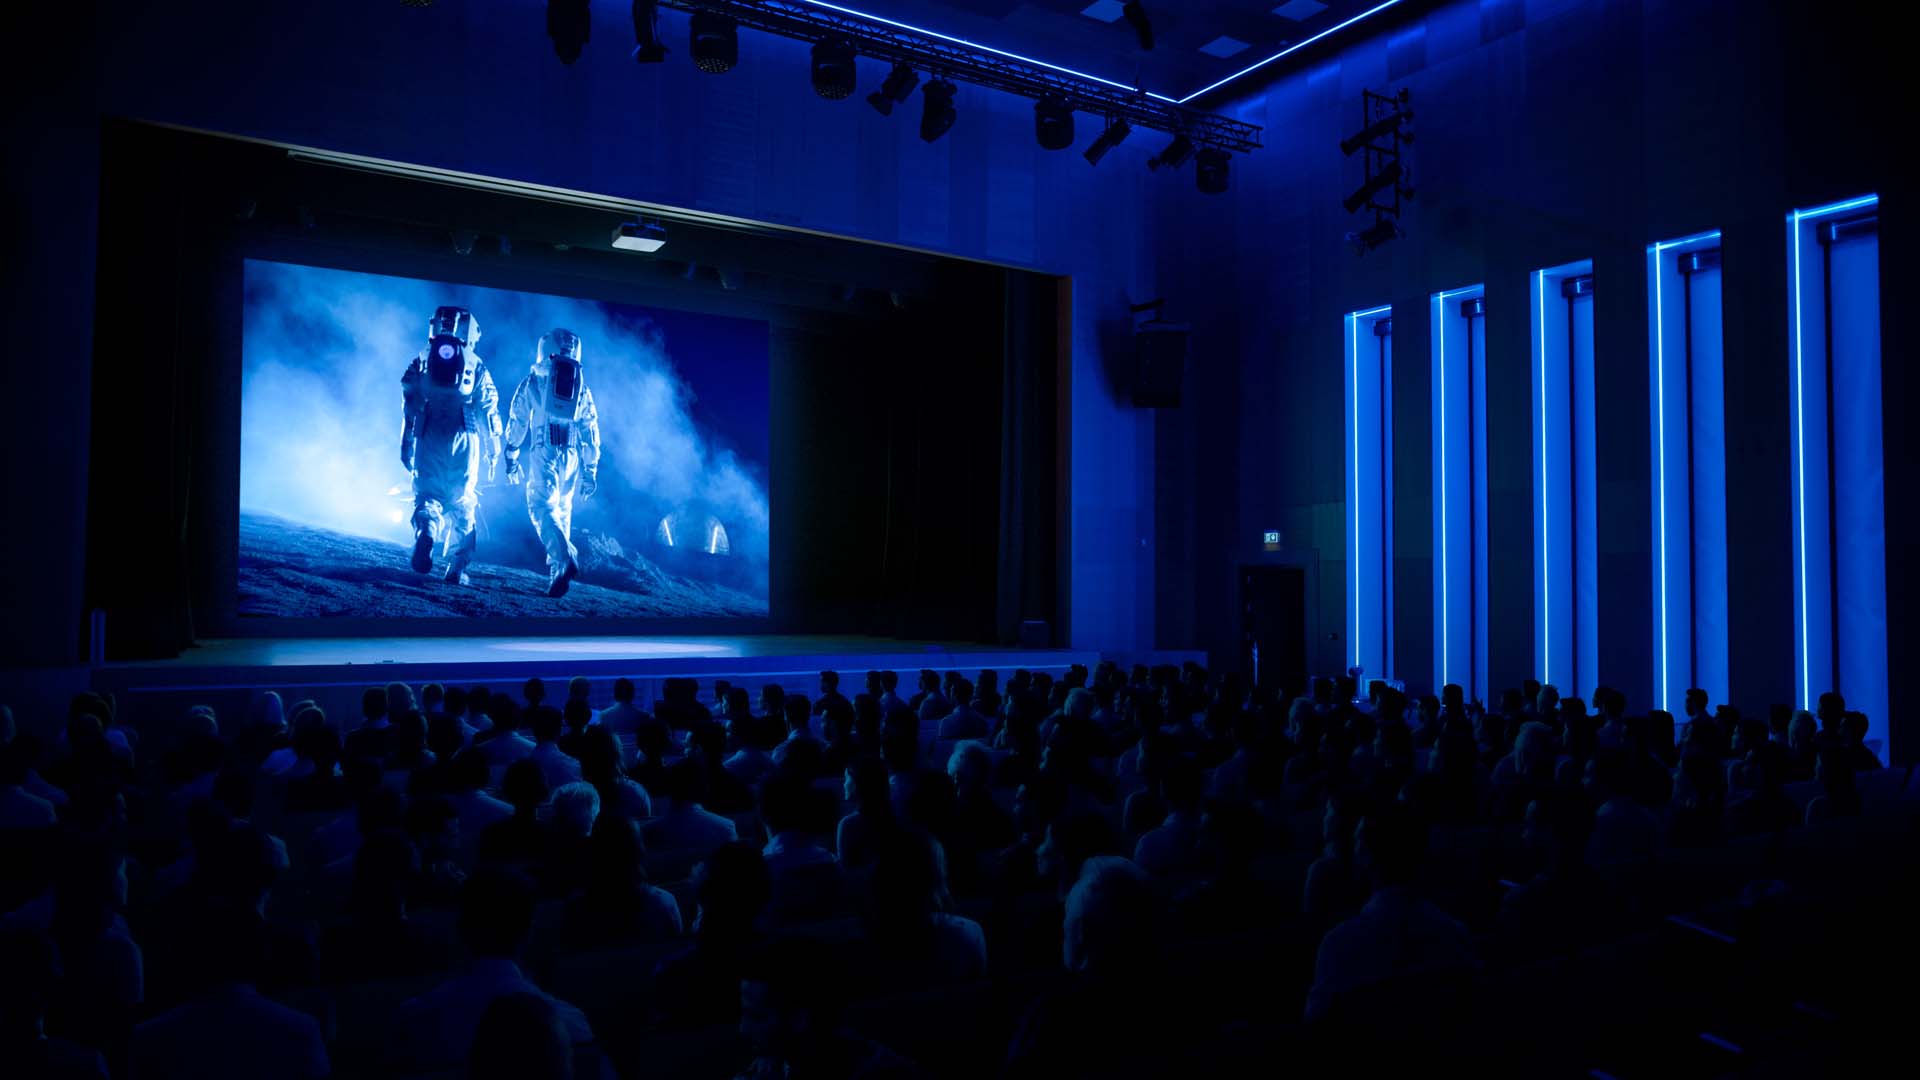 filmvorfuehrung-kinosaal-publikum.jpg